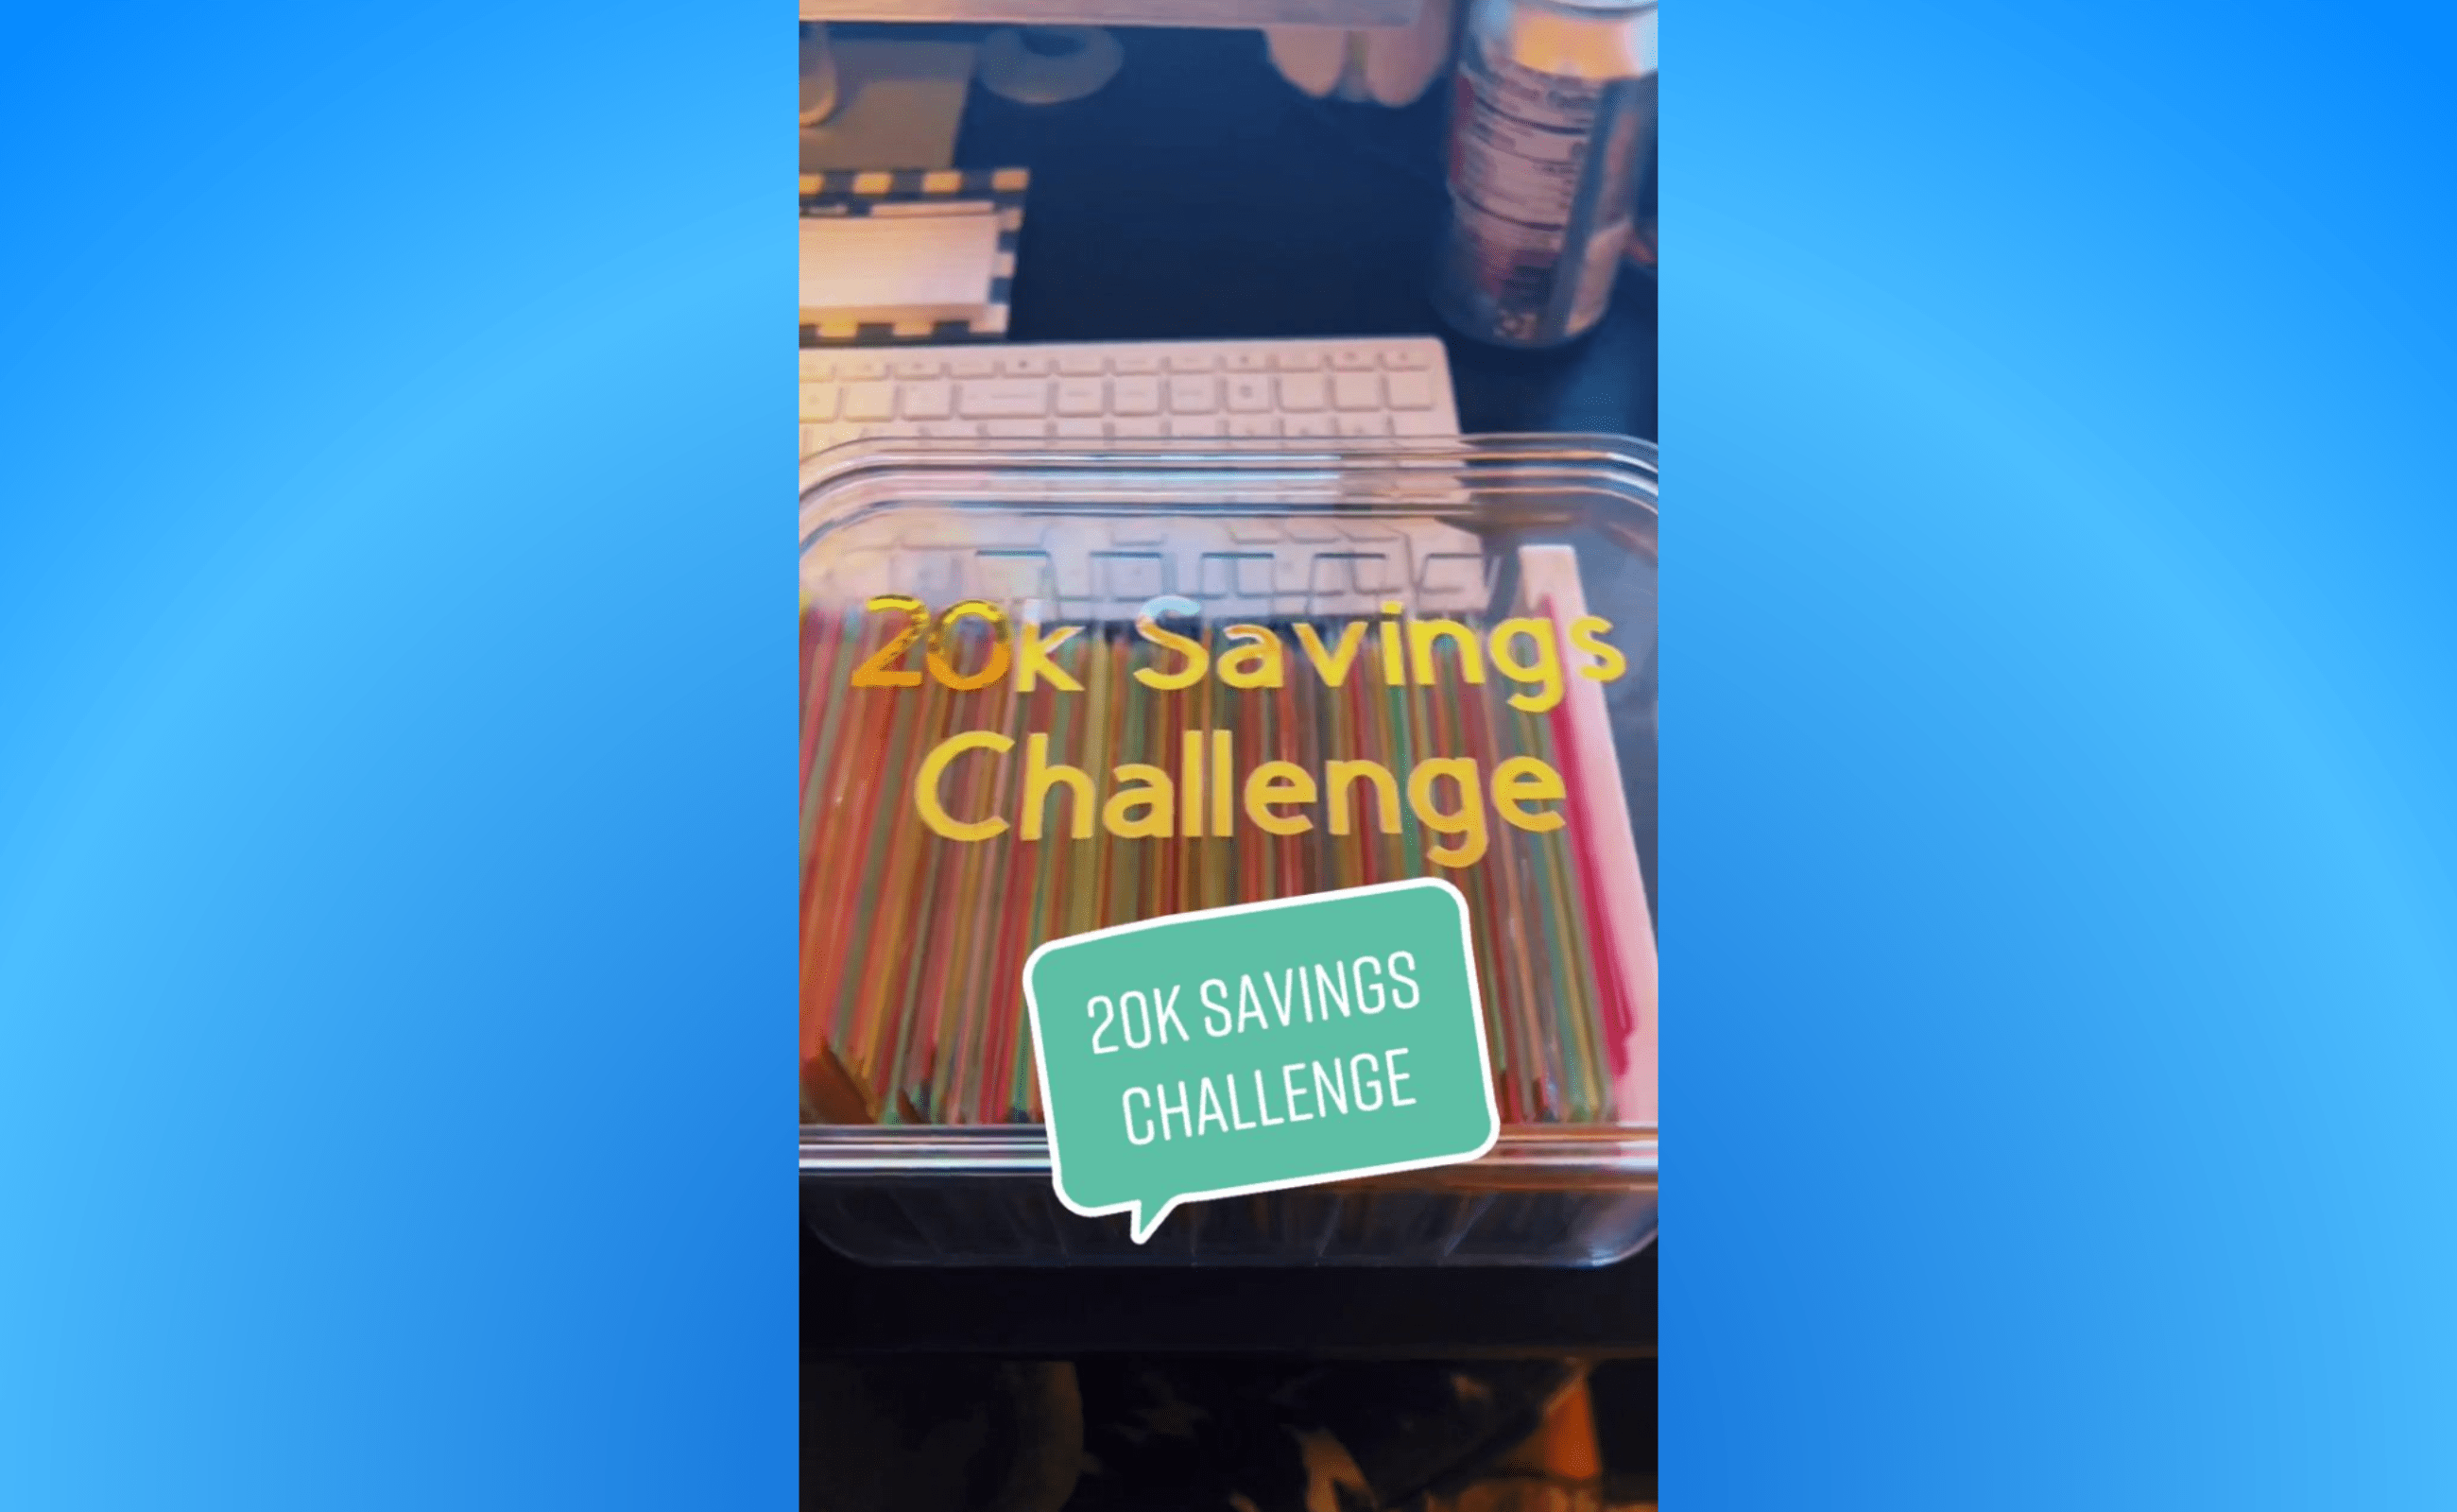 TikTok Challenge Idea: Savings challenge